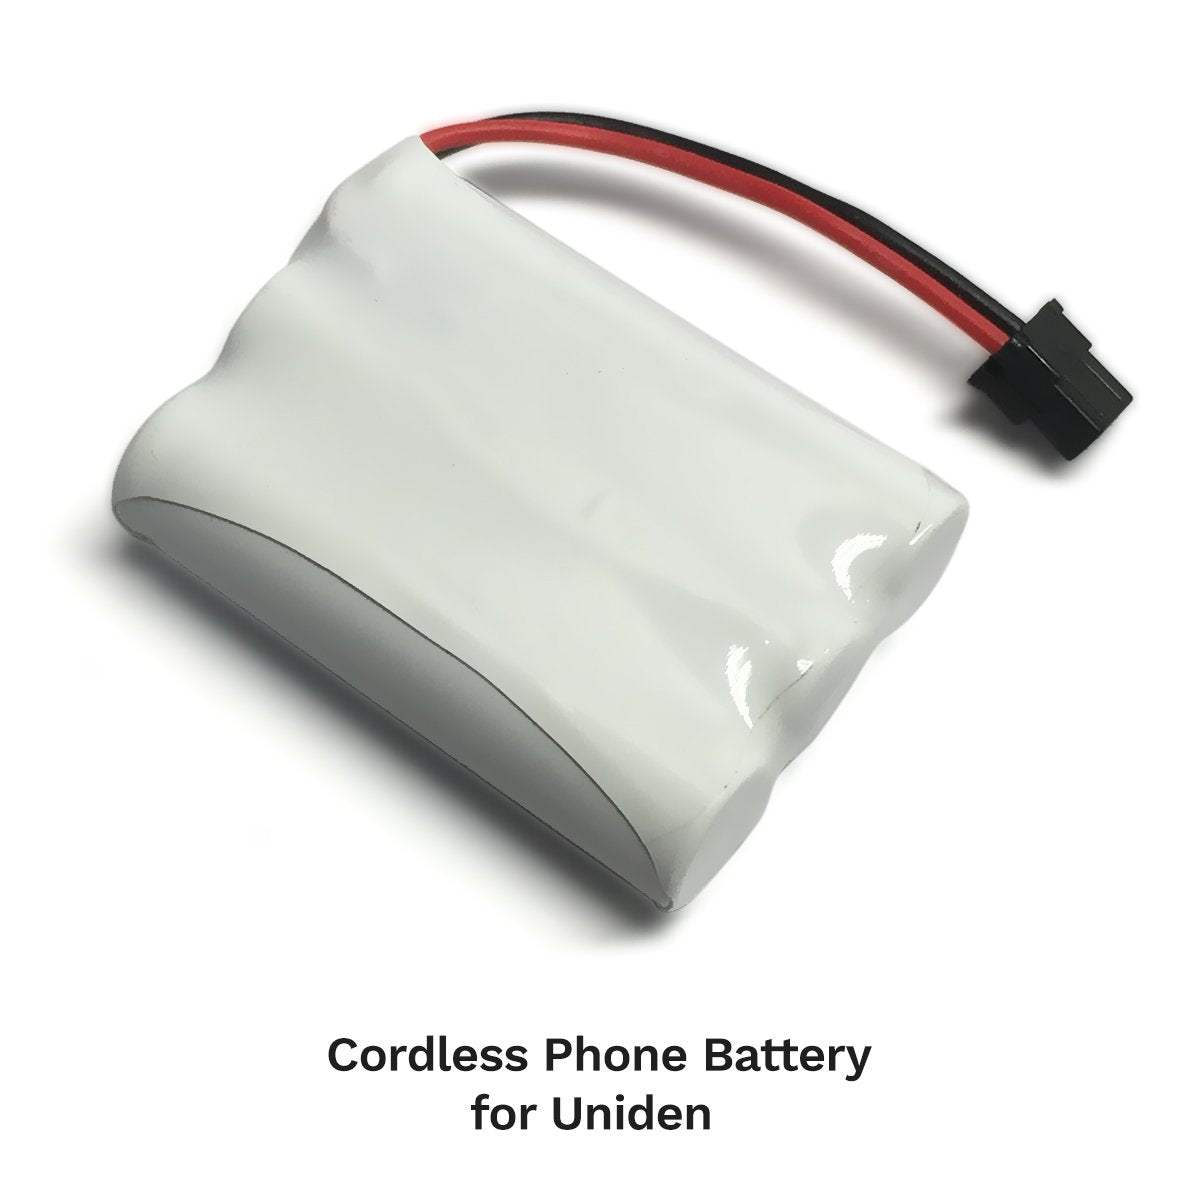 Uniden DCT738-2 Cordless Phone Battery